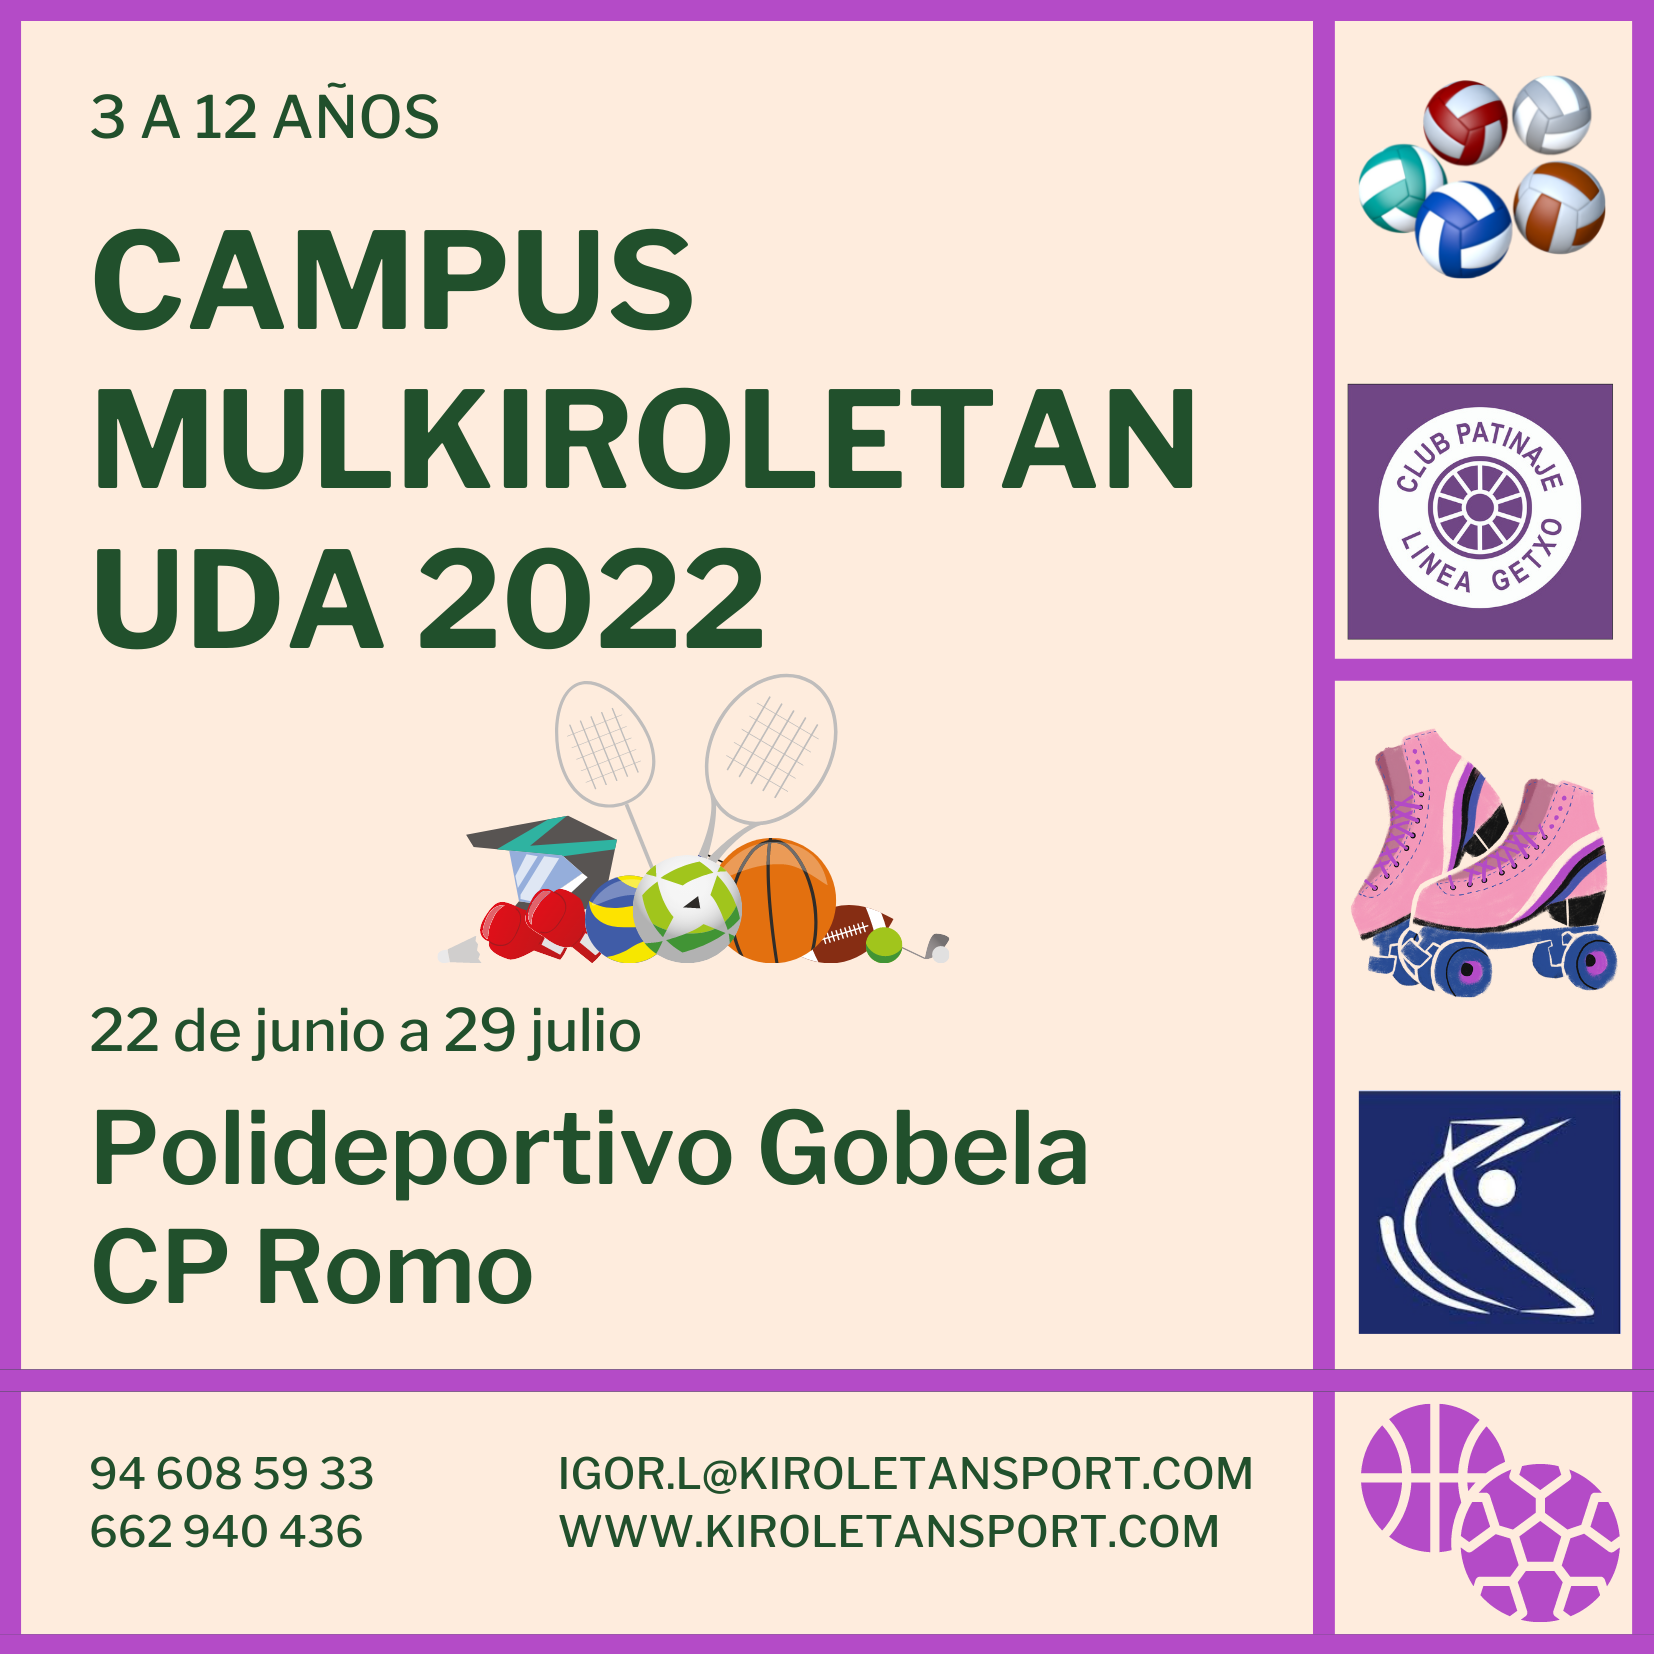 Campus Multikiroletan Uda 2022